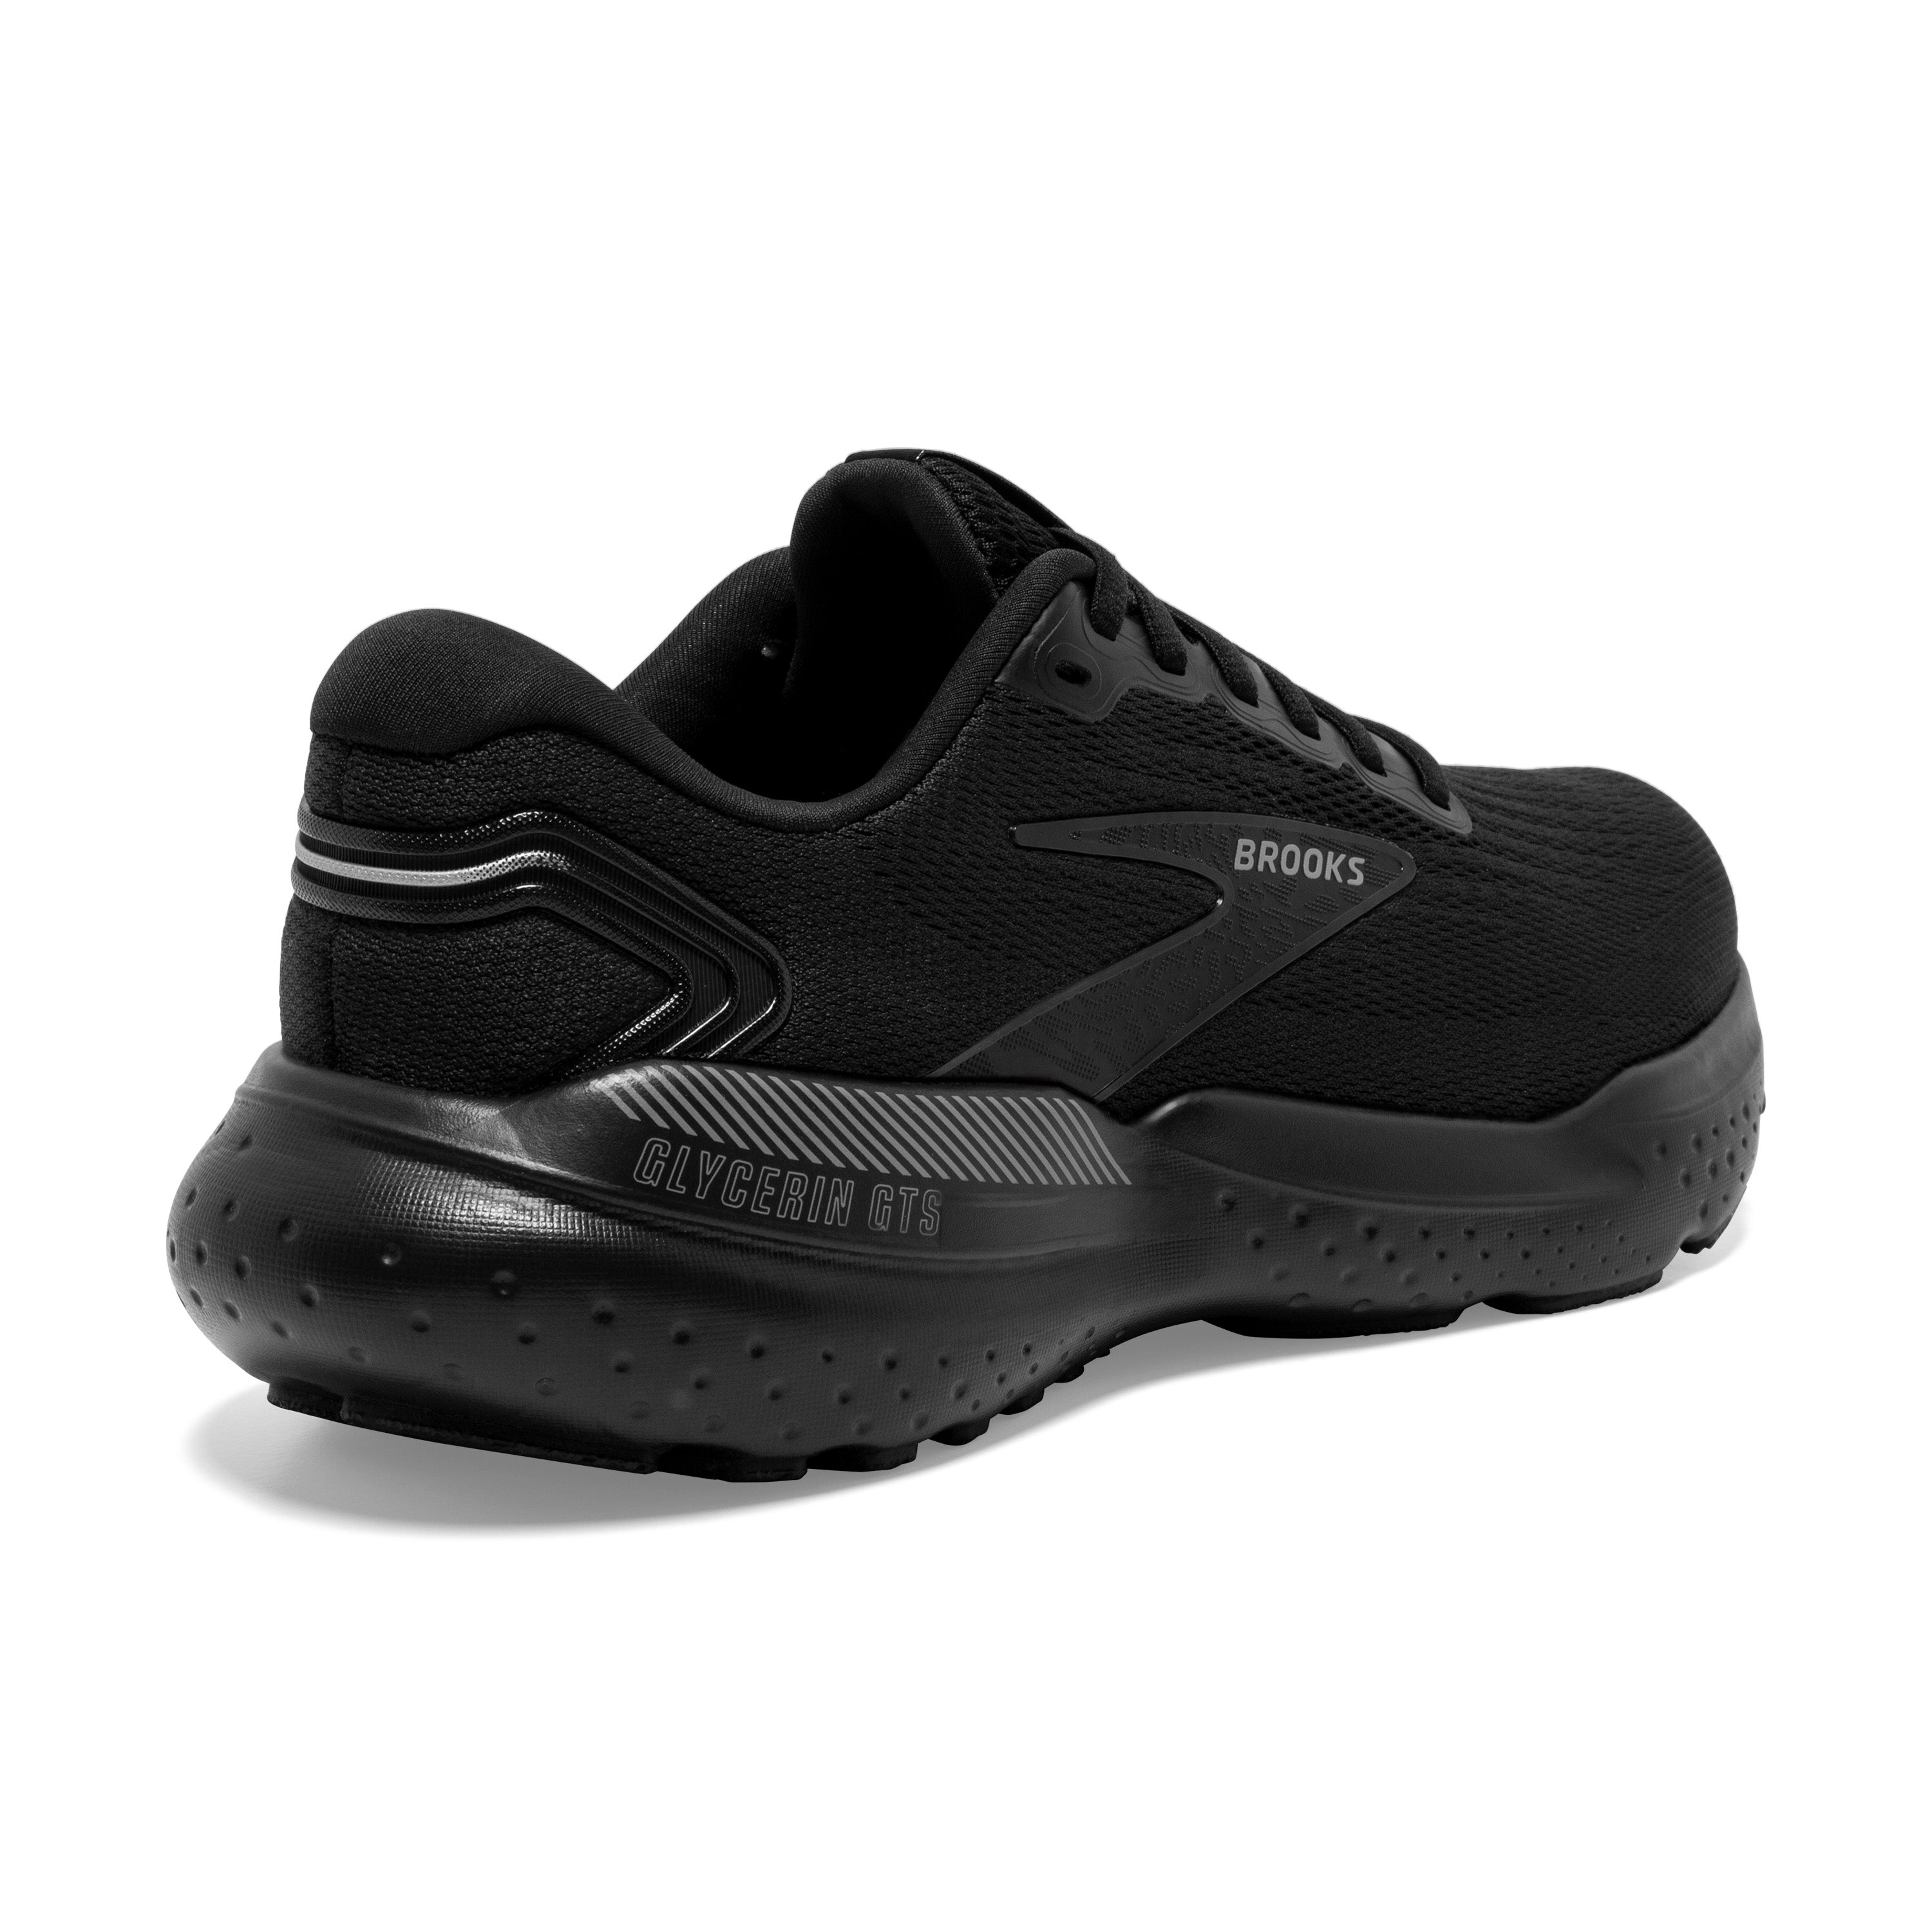 Brooks Glycerin GTS 21 Men's Running Shoes